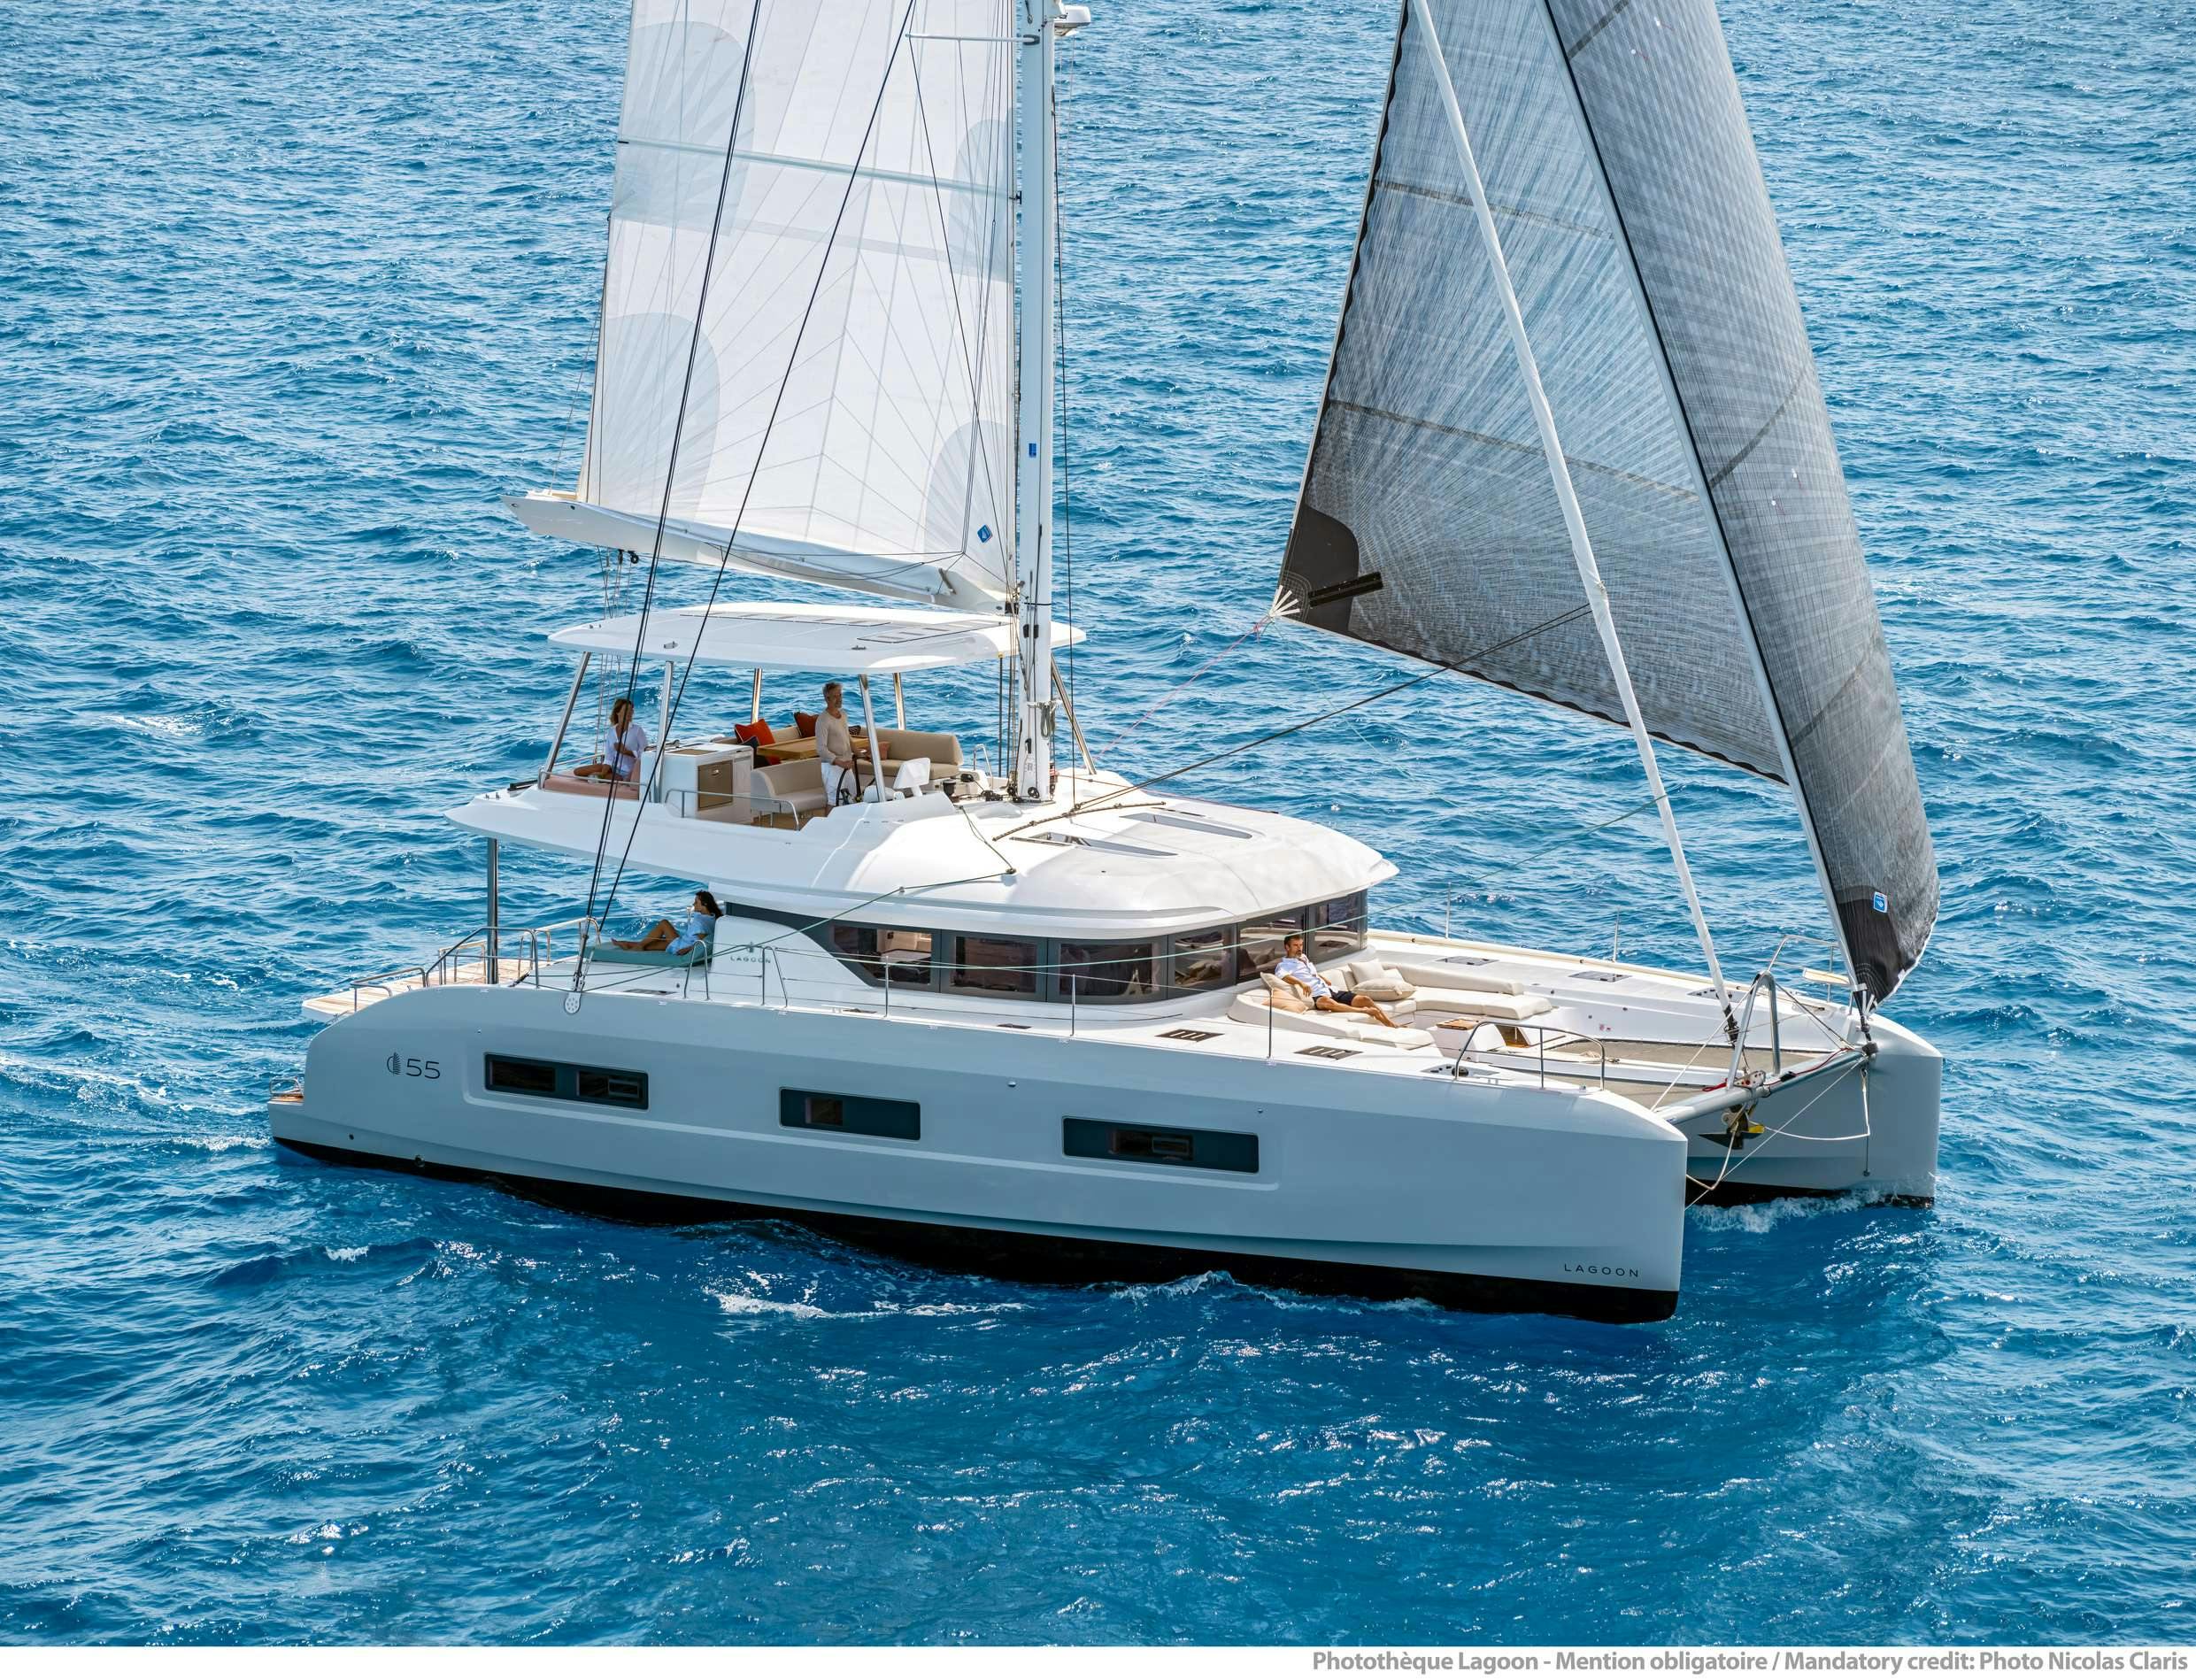 VALIUM 55 - Catamaran Charter Rhodes & Boat hire in Greece 1